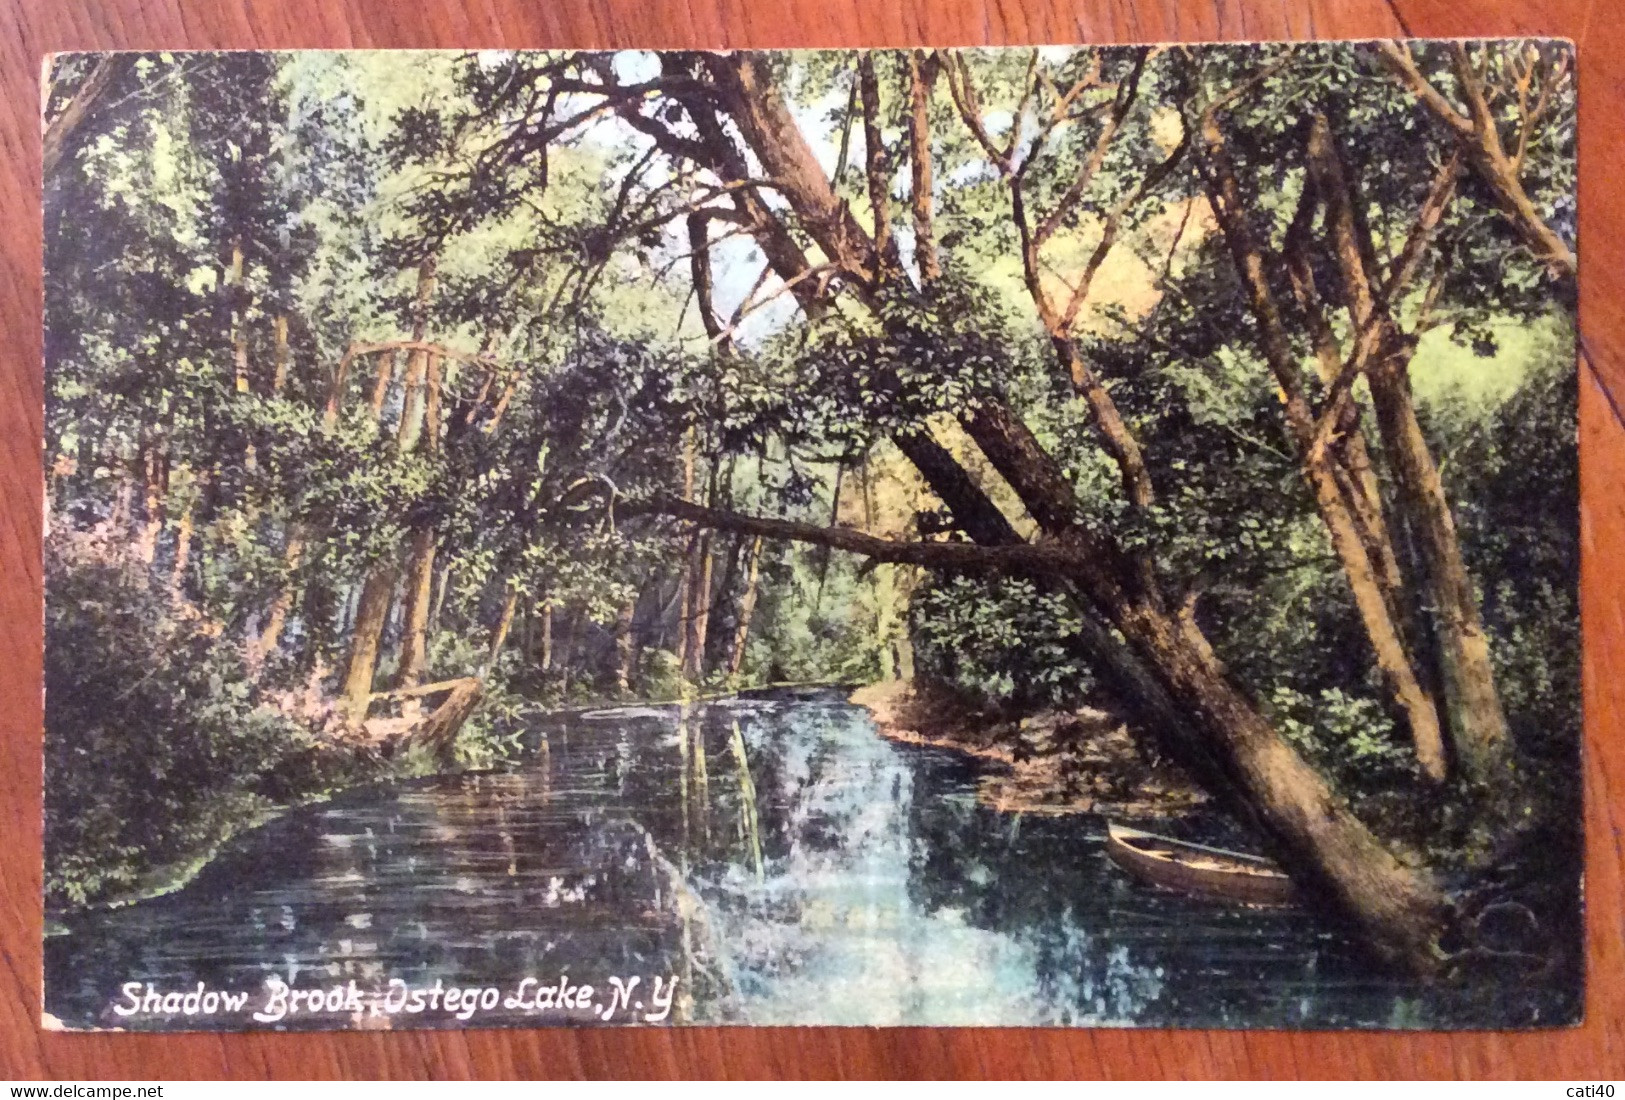 USA -  OSTEGO LAKE SHADOW  BROOK  - VINTAGE POST CARD   1911 - Fall River